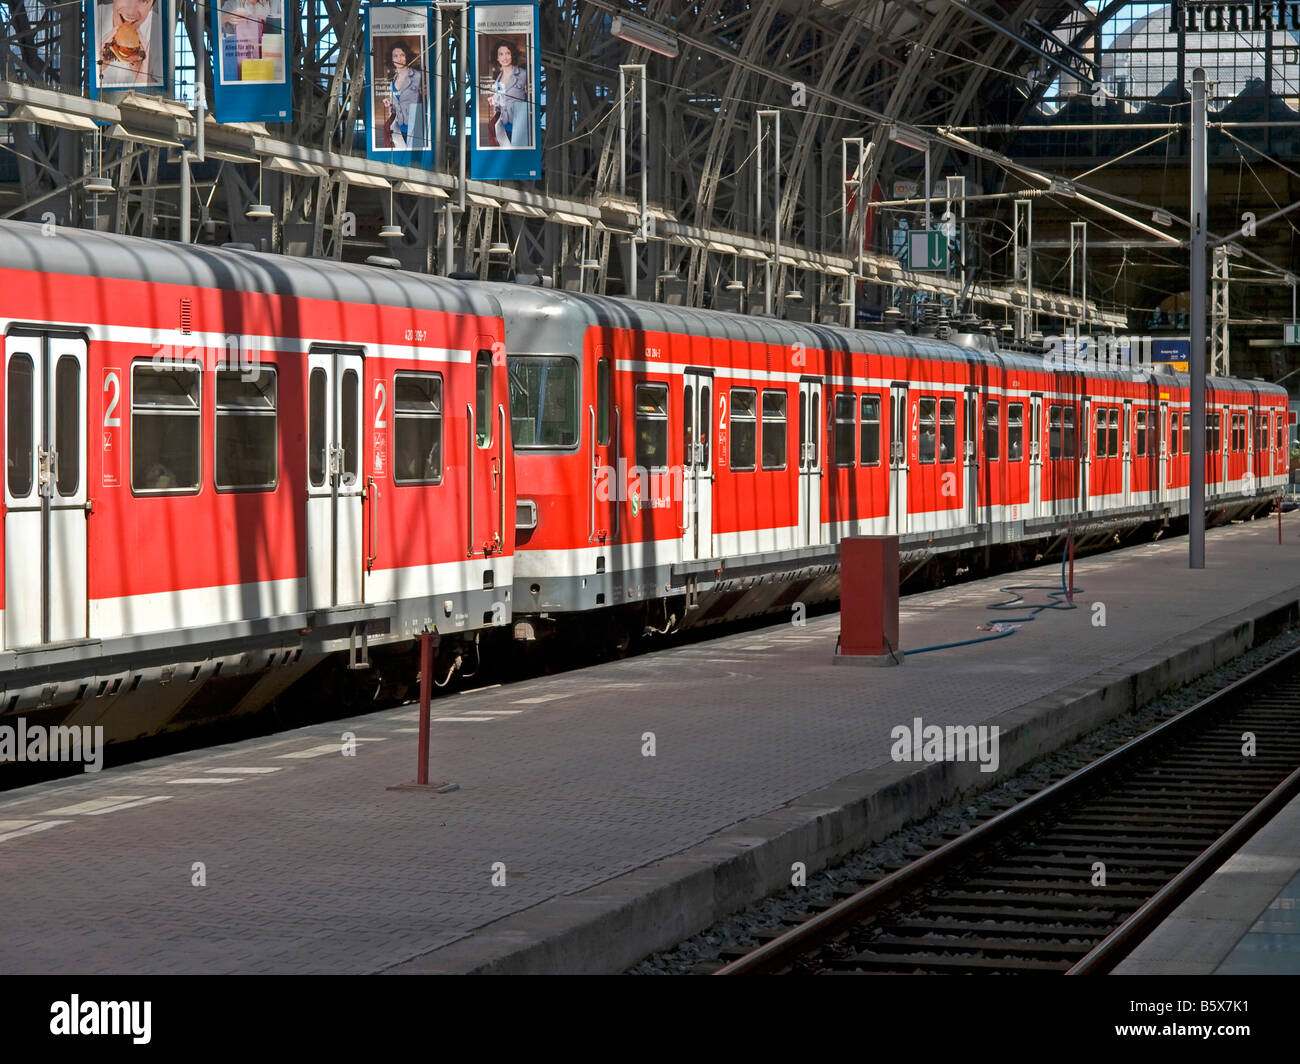 empty train S Bahn on train platform at the main railway station of Frankfurt am Main Germany Stock Photo